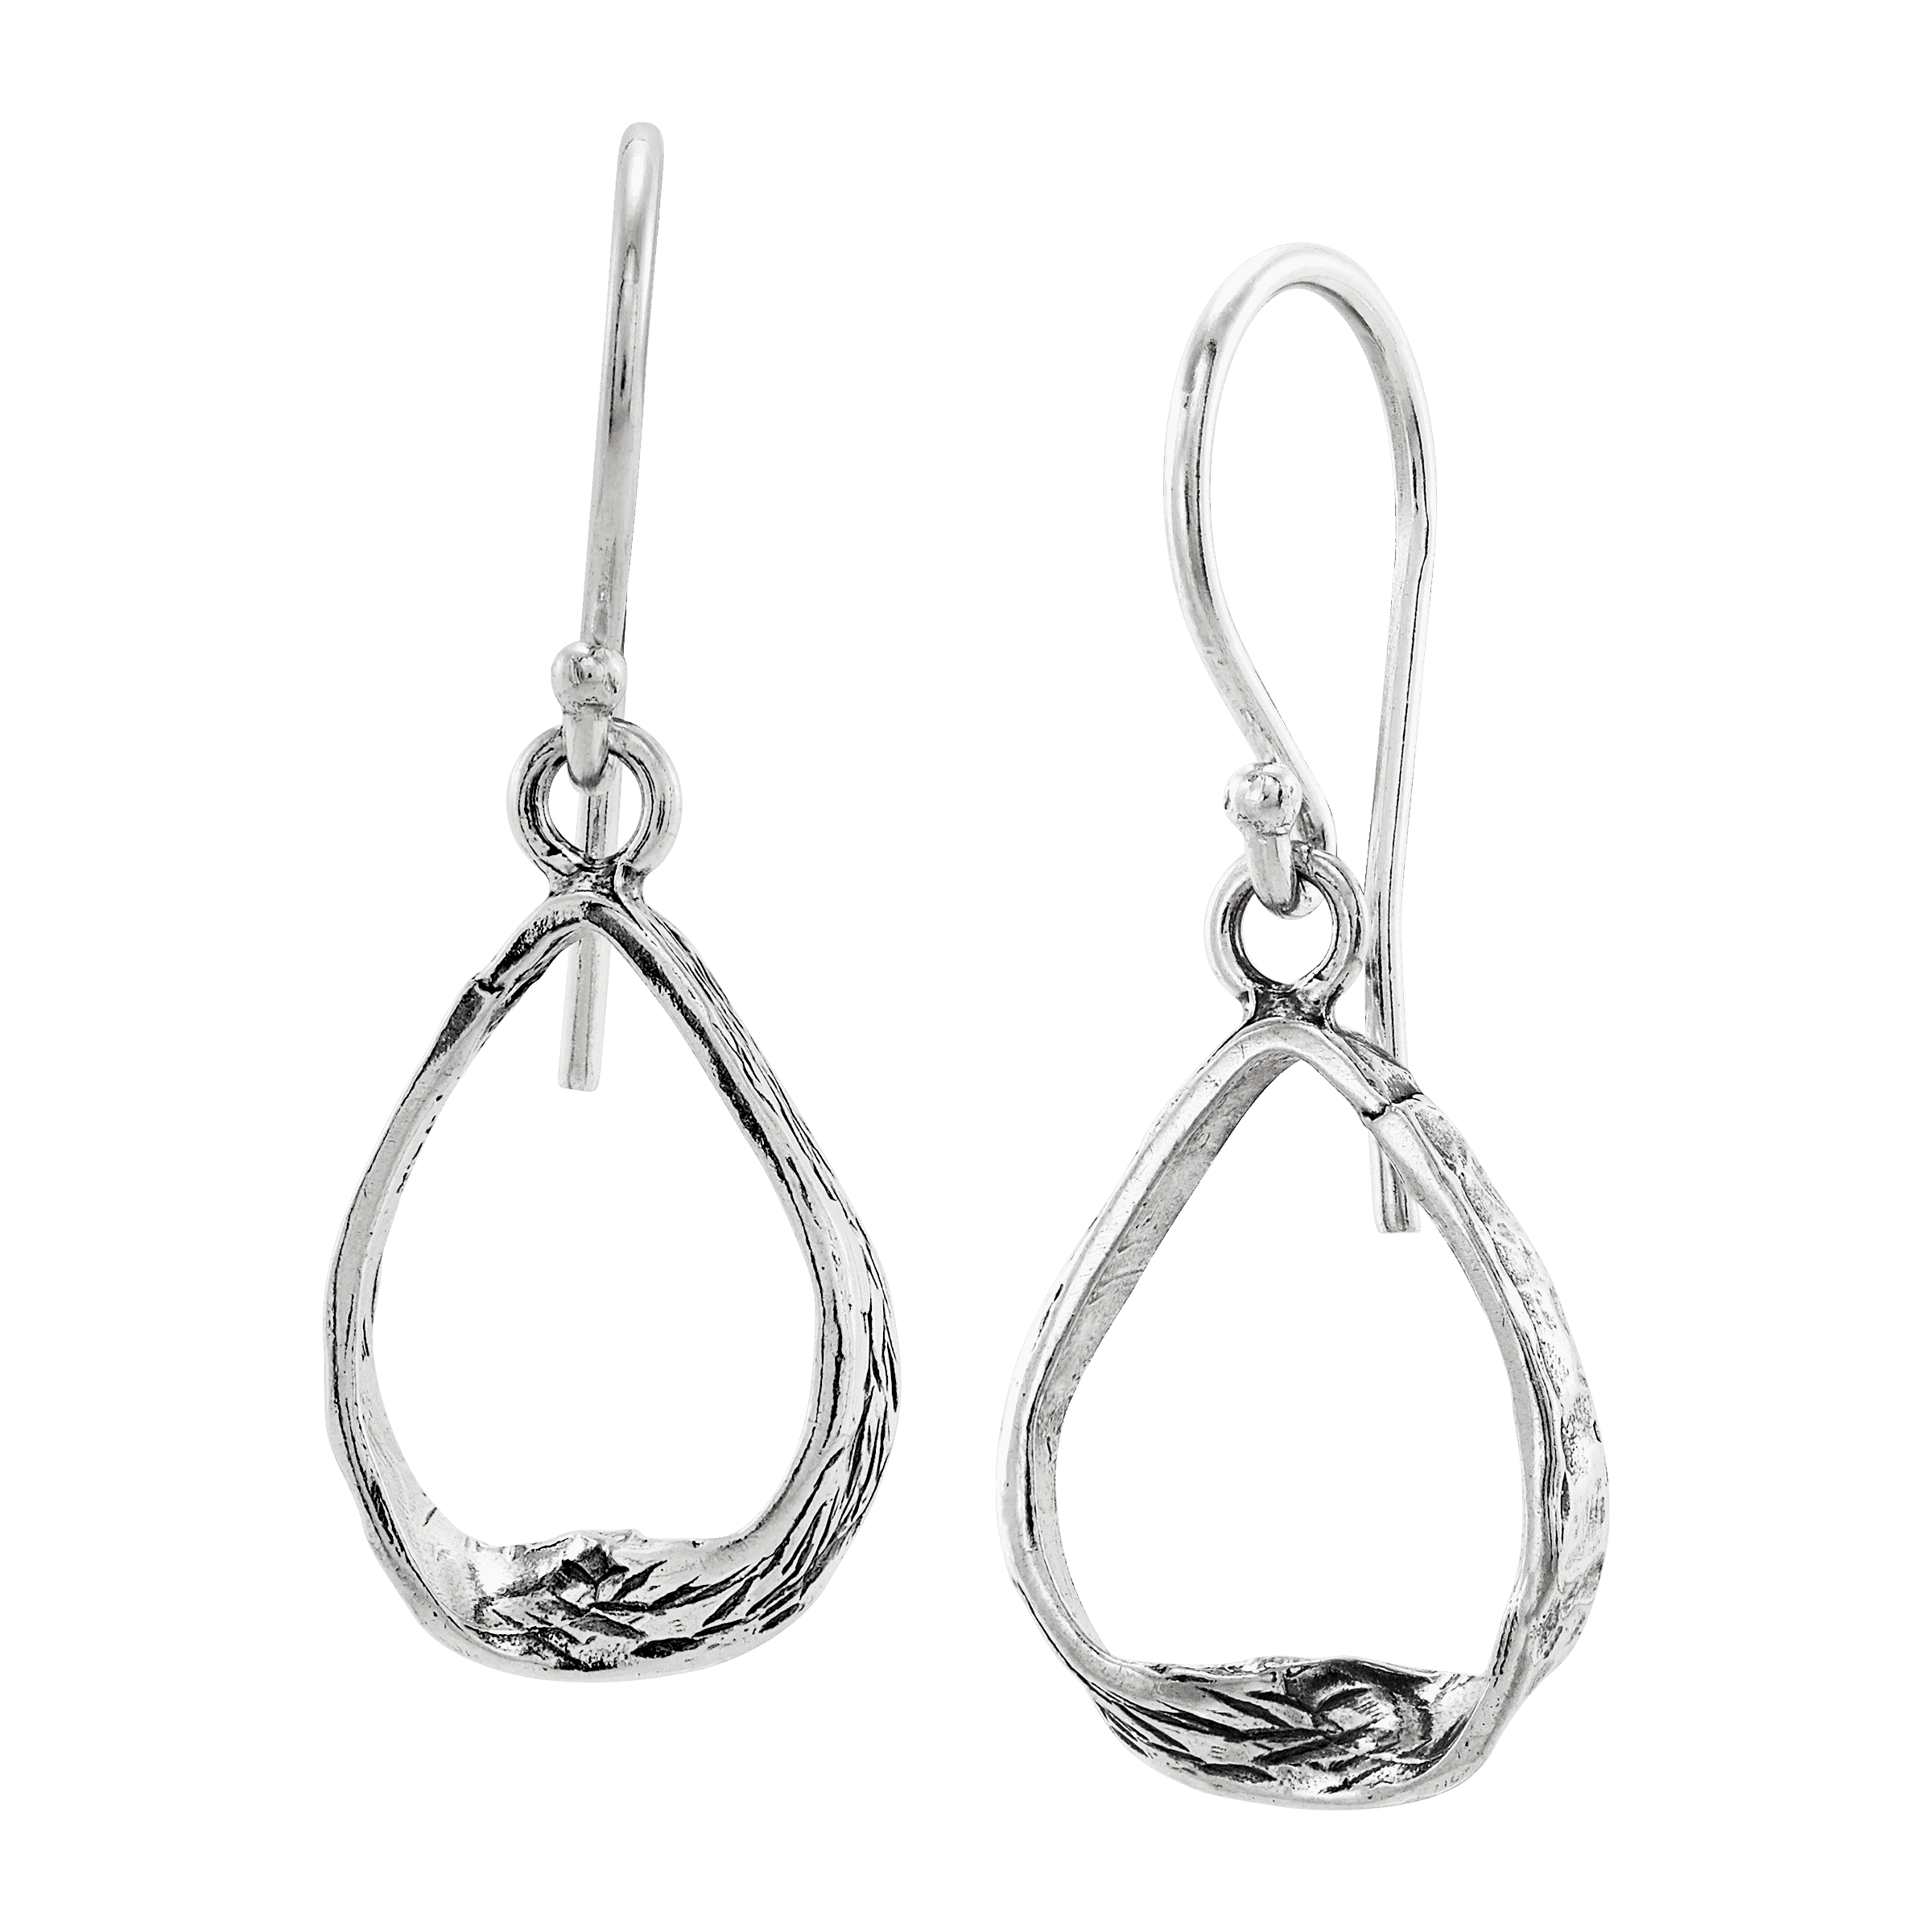 Silpada 'Showcase Closed' Hoop Earrings in Sterling Silver | Silpada